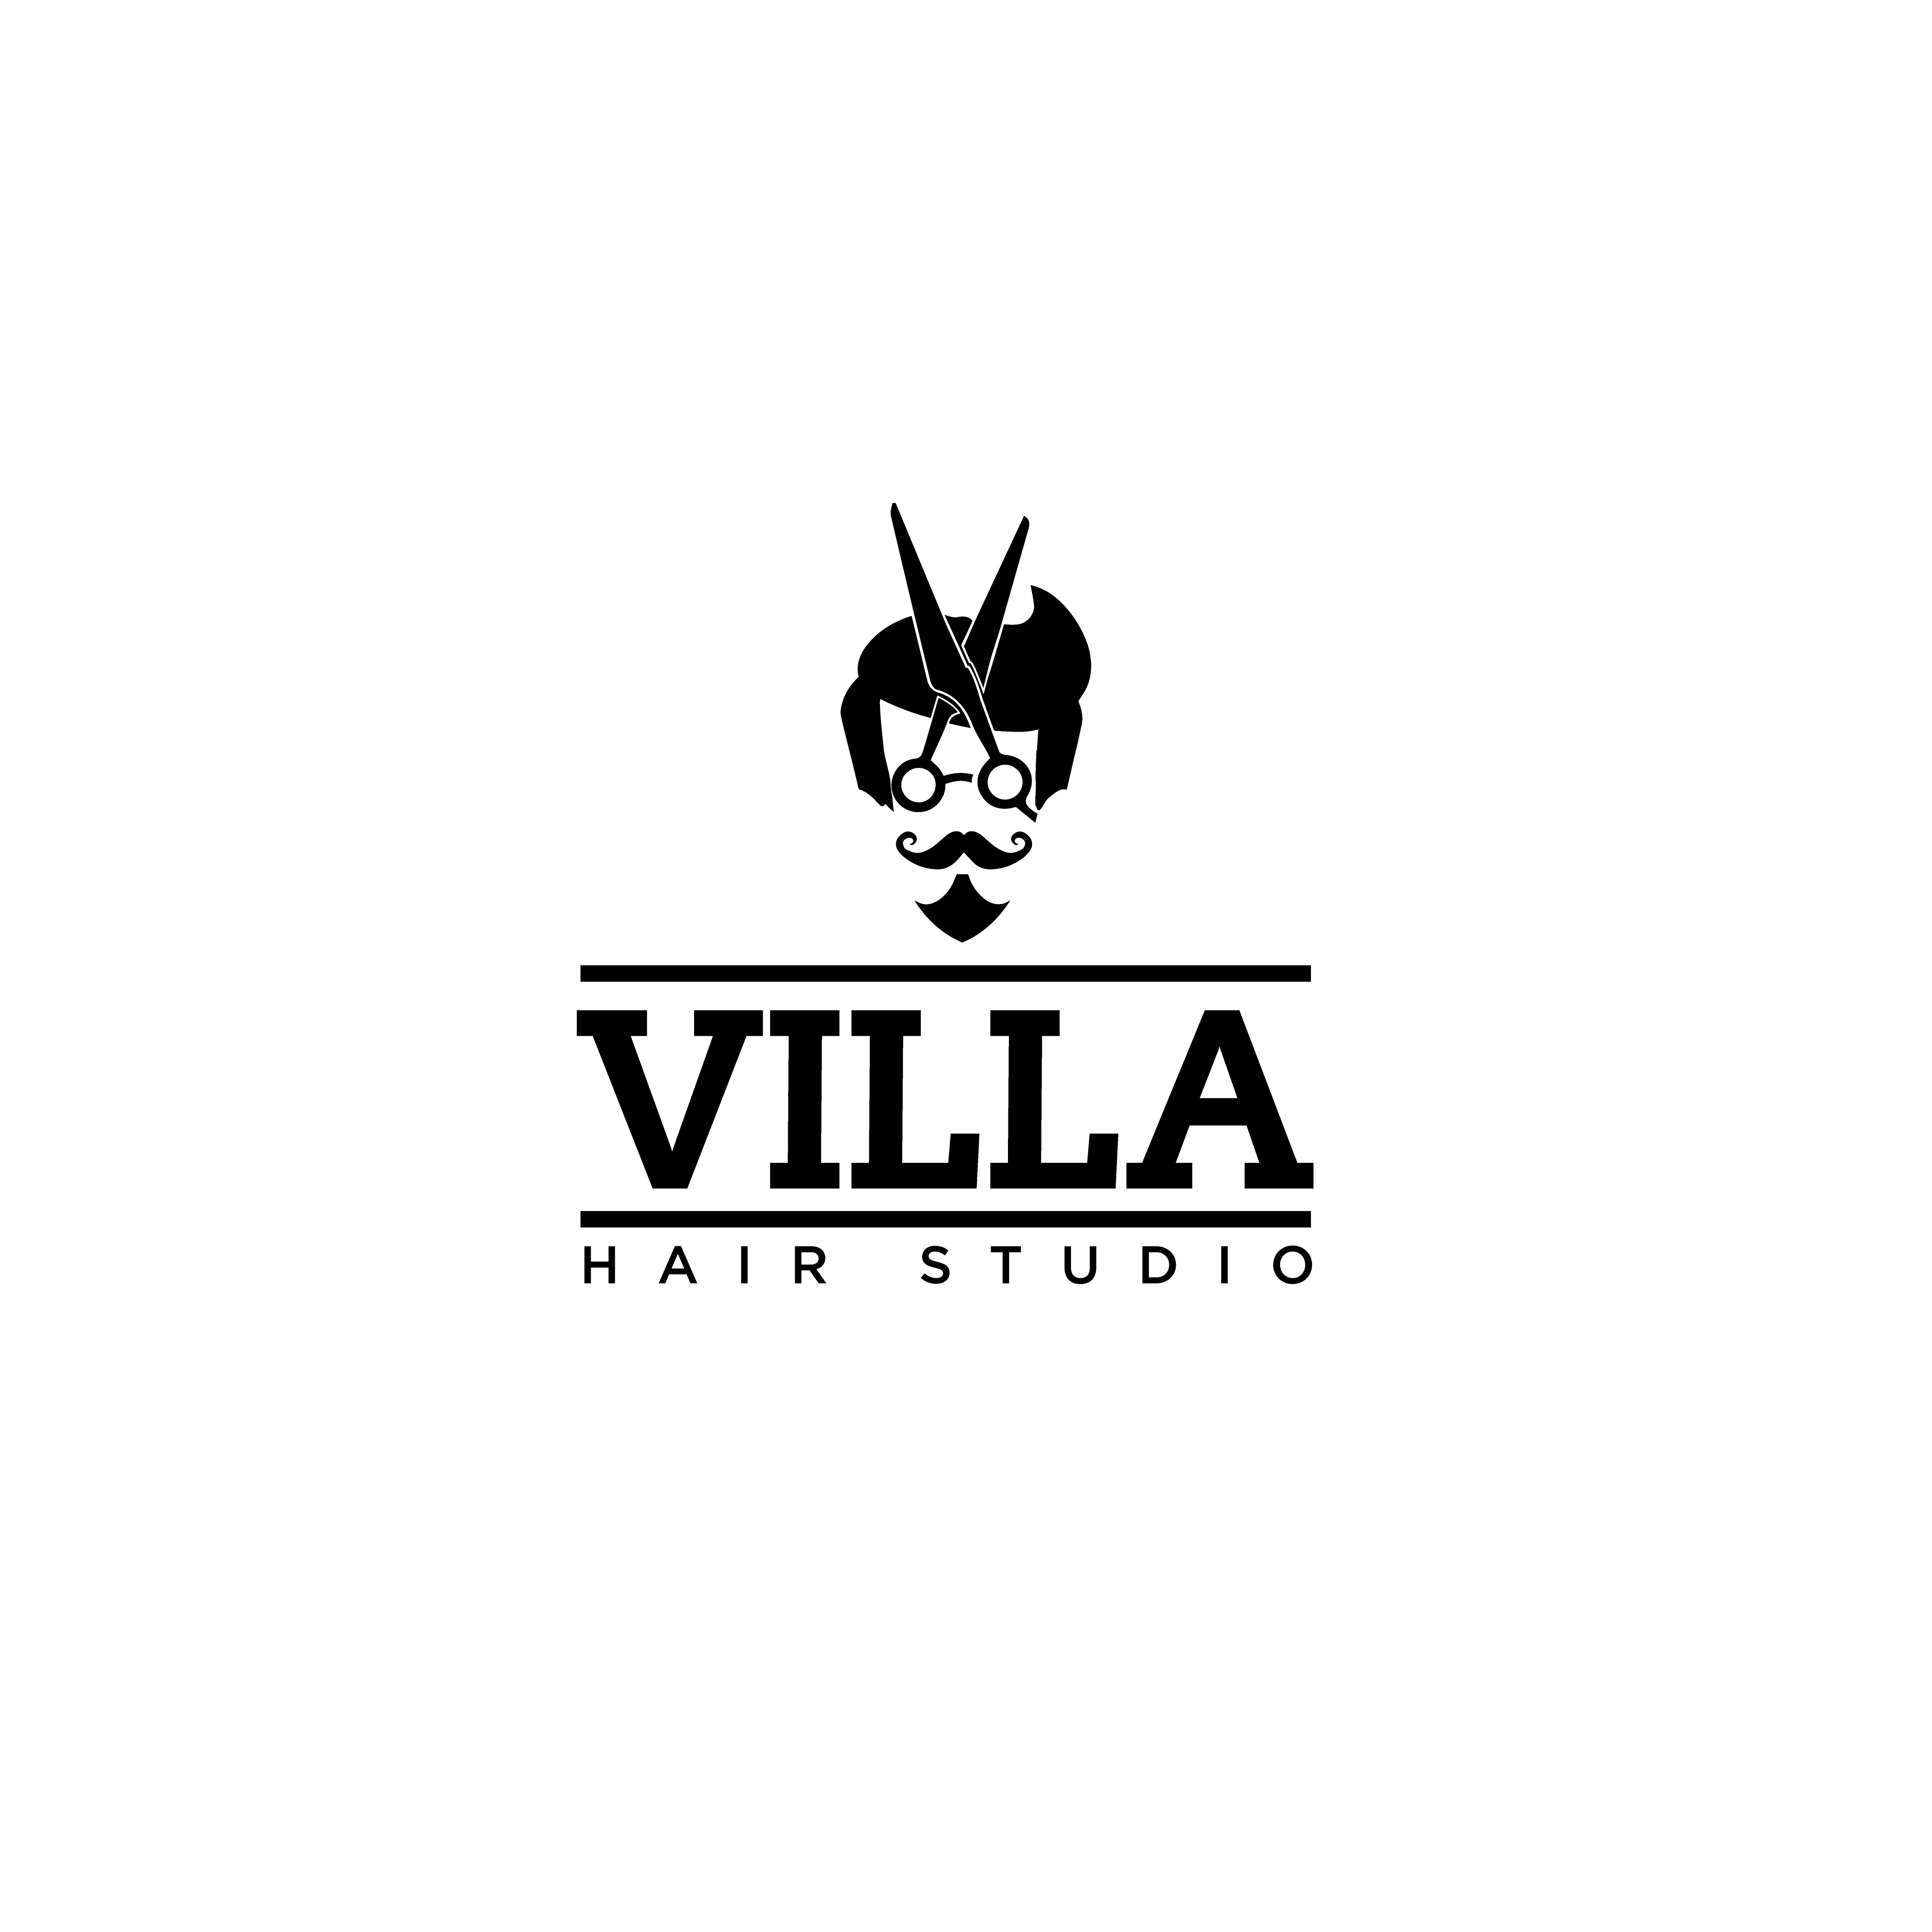 VILLA Hair Studio